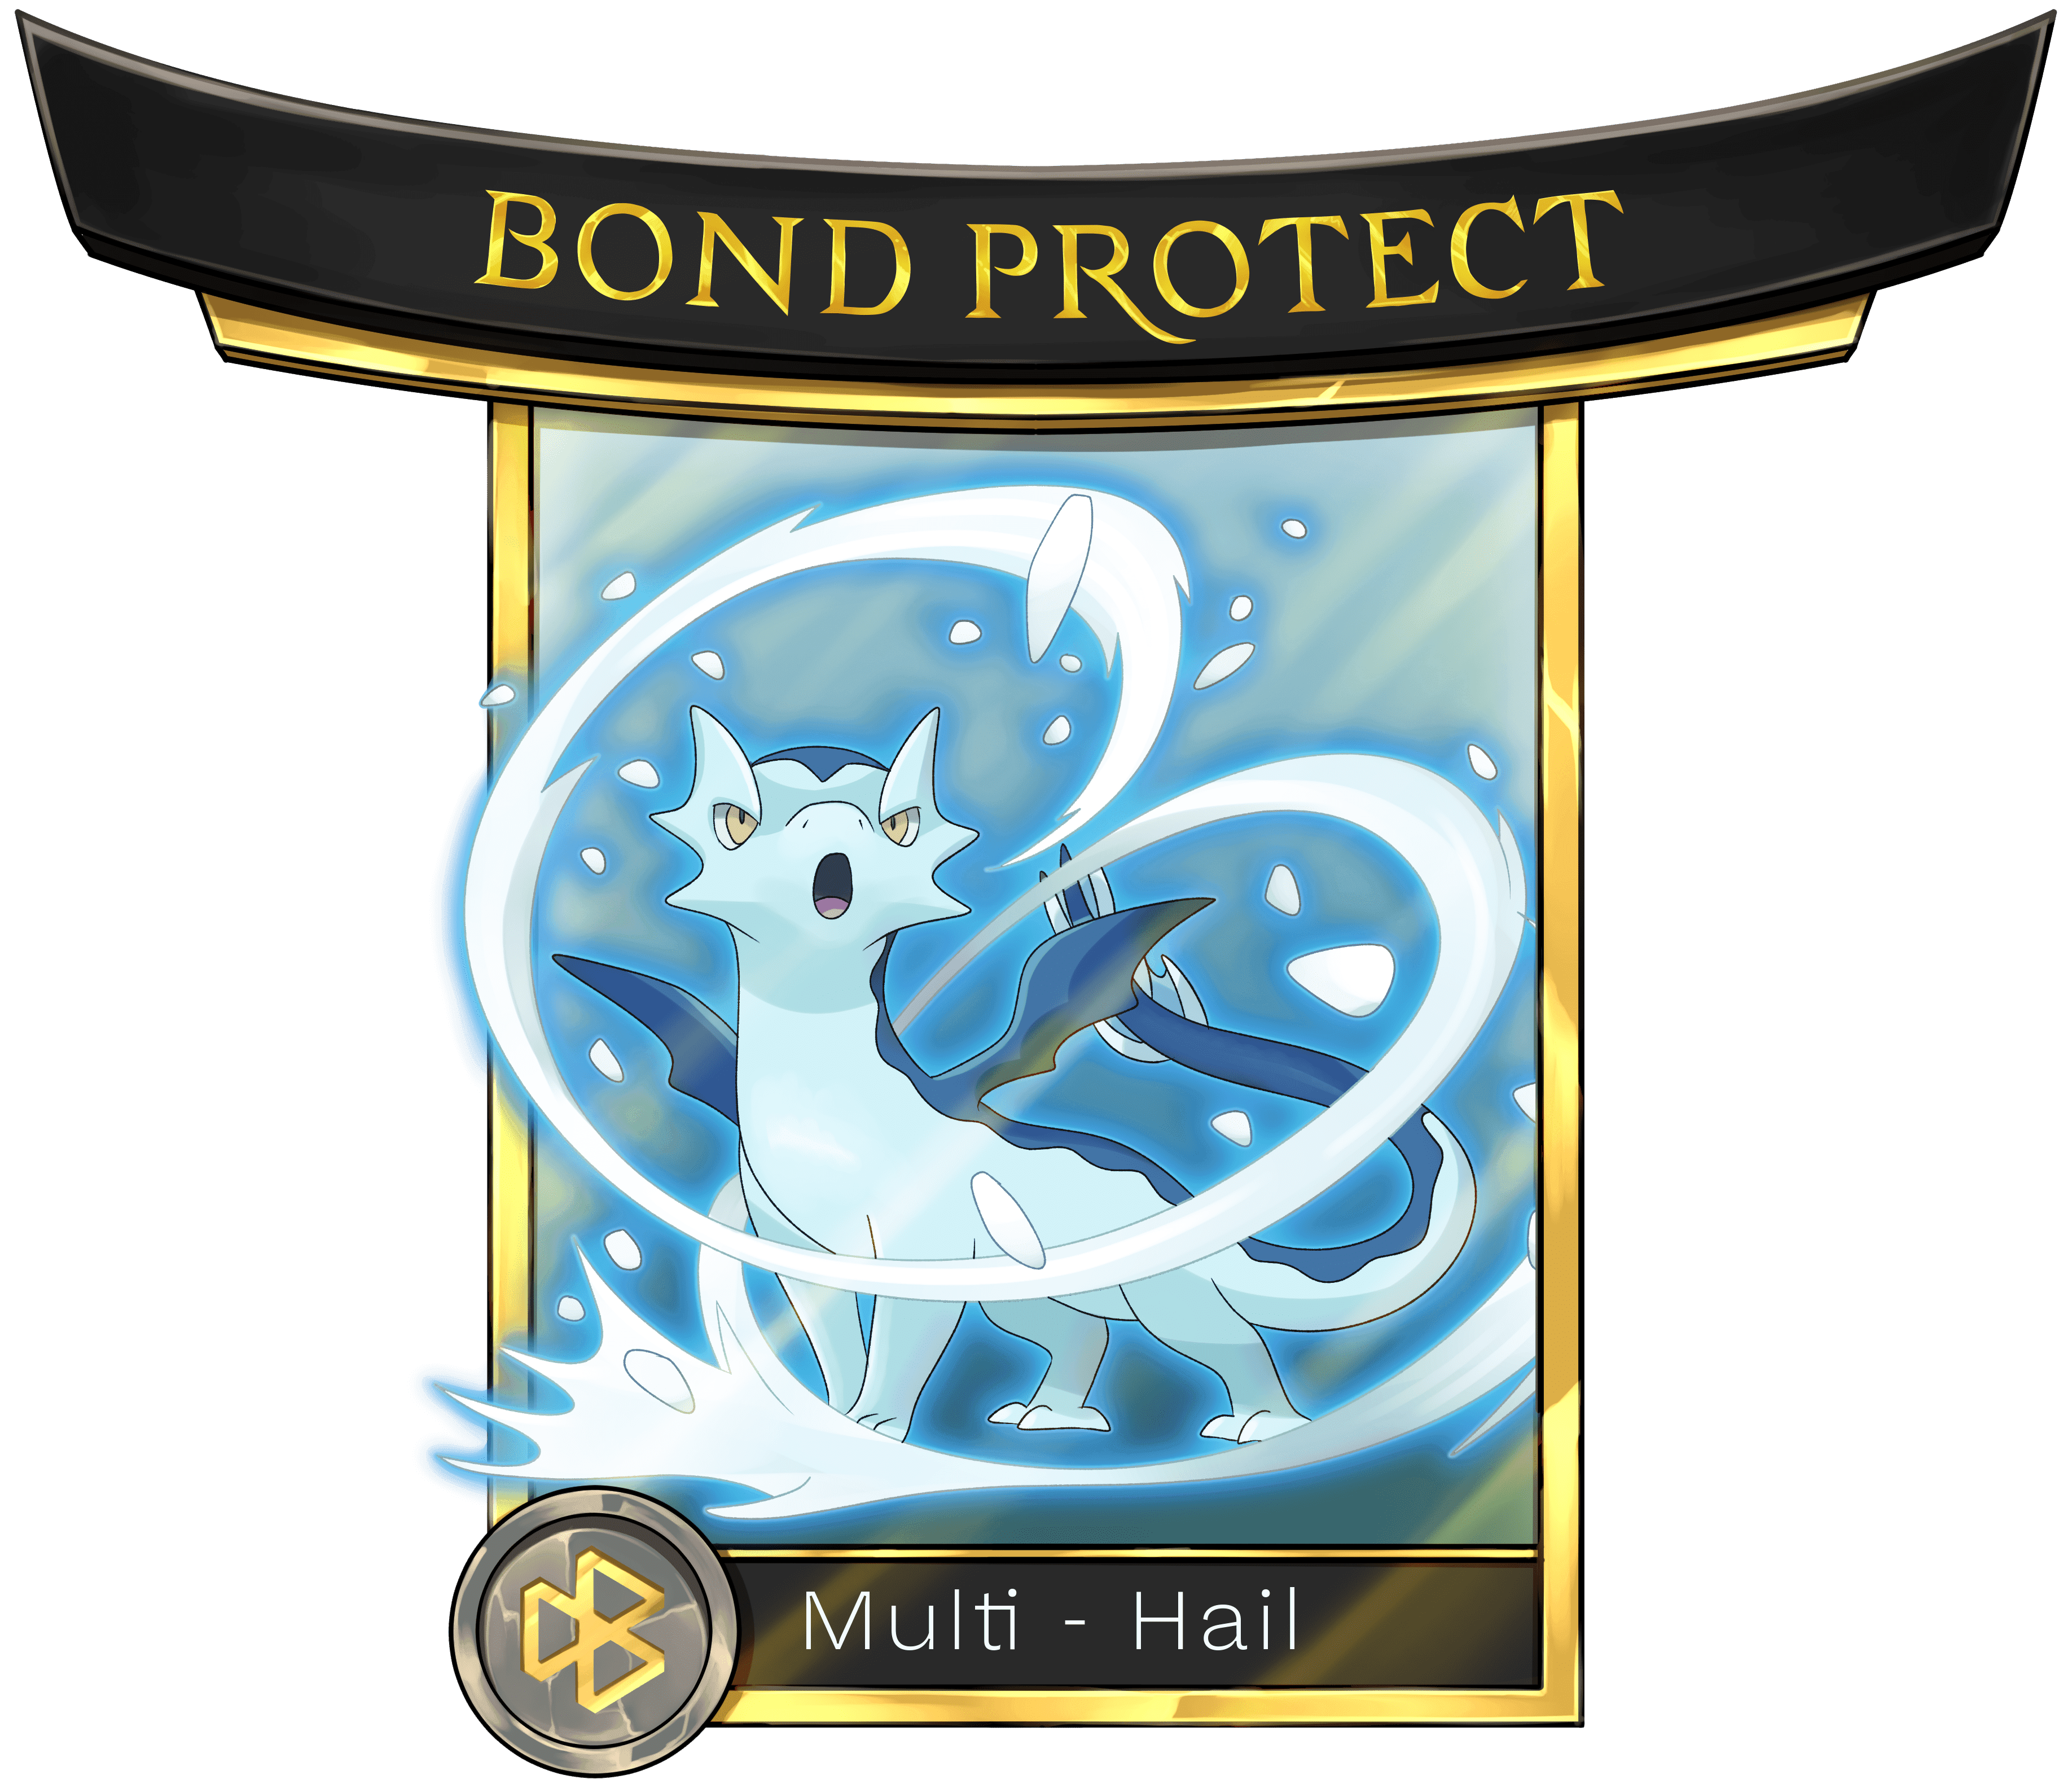 BondProtect (Multi-hail)